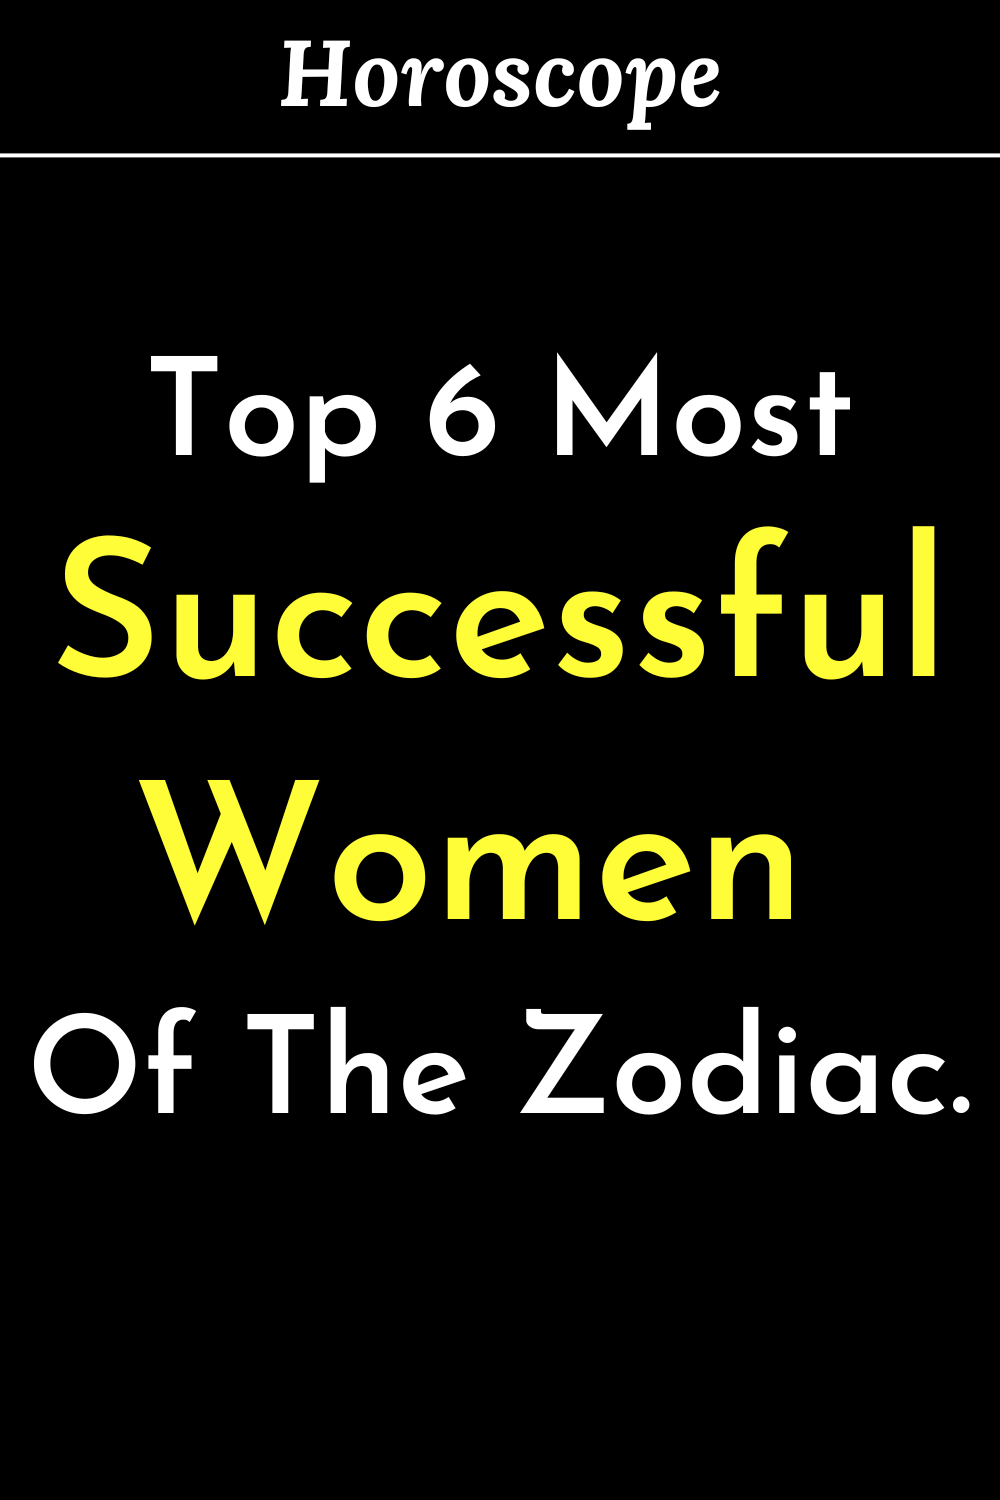 Top 6 Most Successful Women Of The Zodiac.